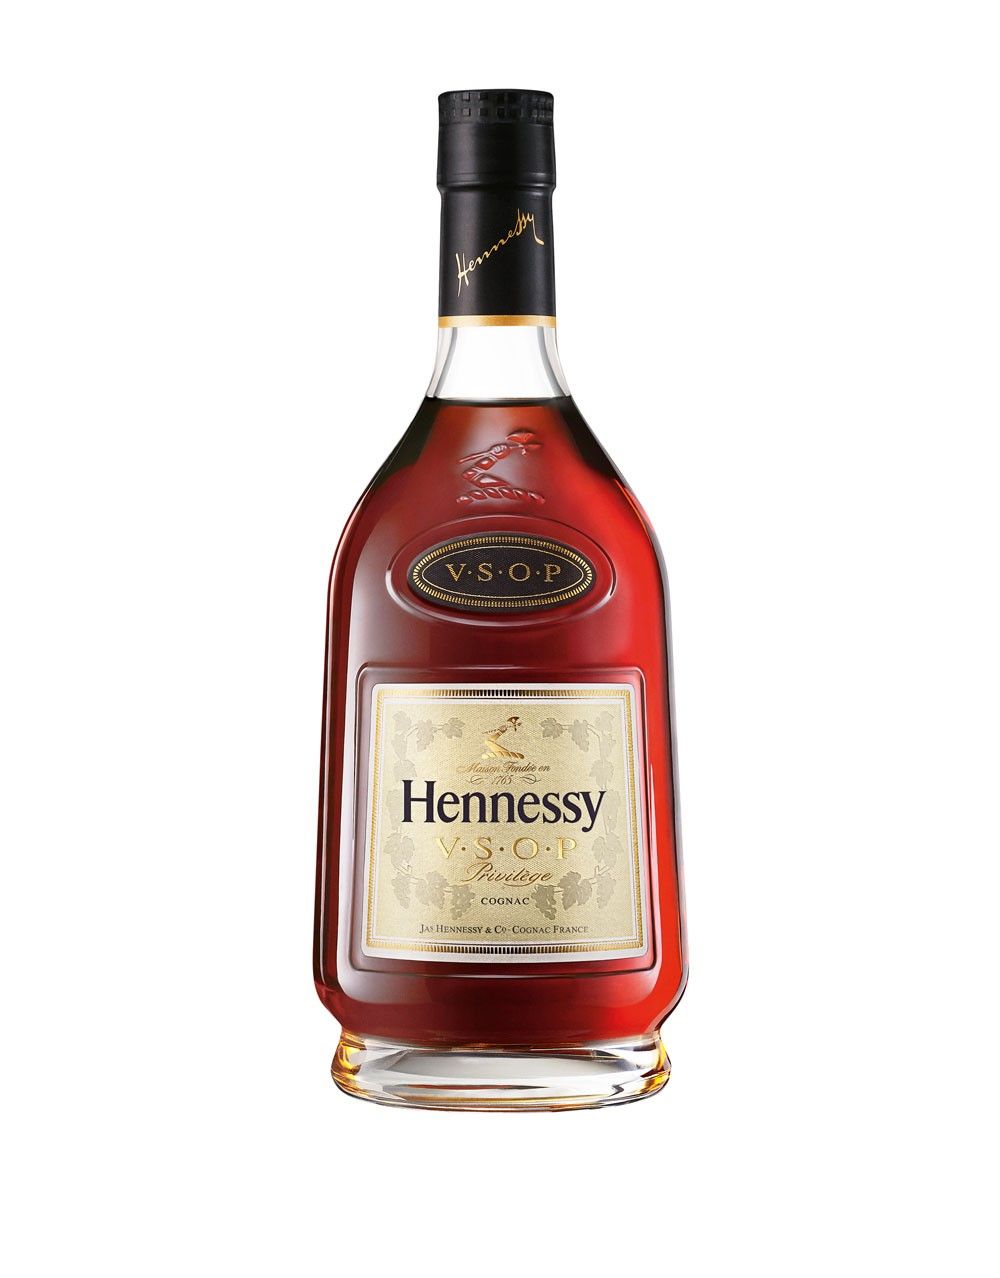 Hennessy V.S.O.P Privilège Cognac | Buy Online or Send as a Gift